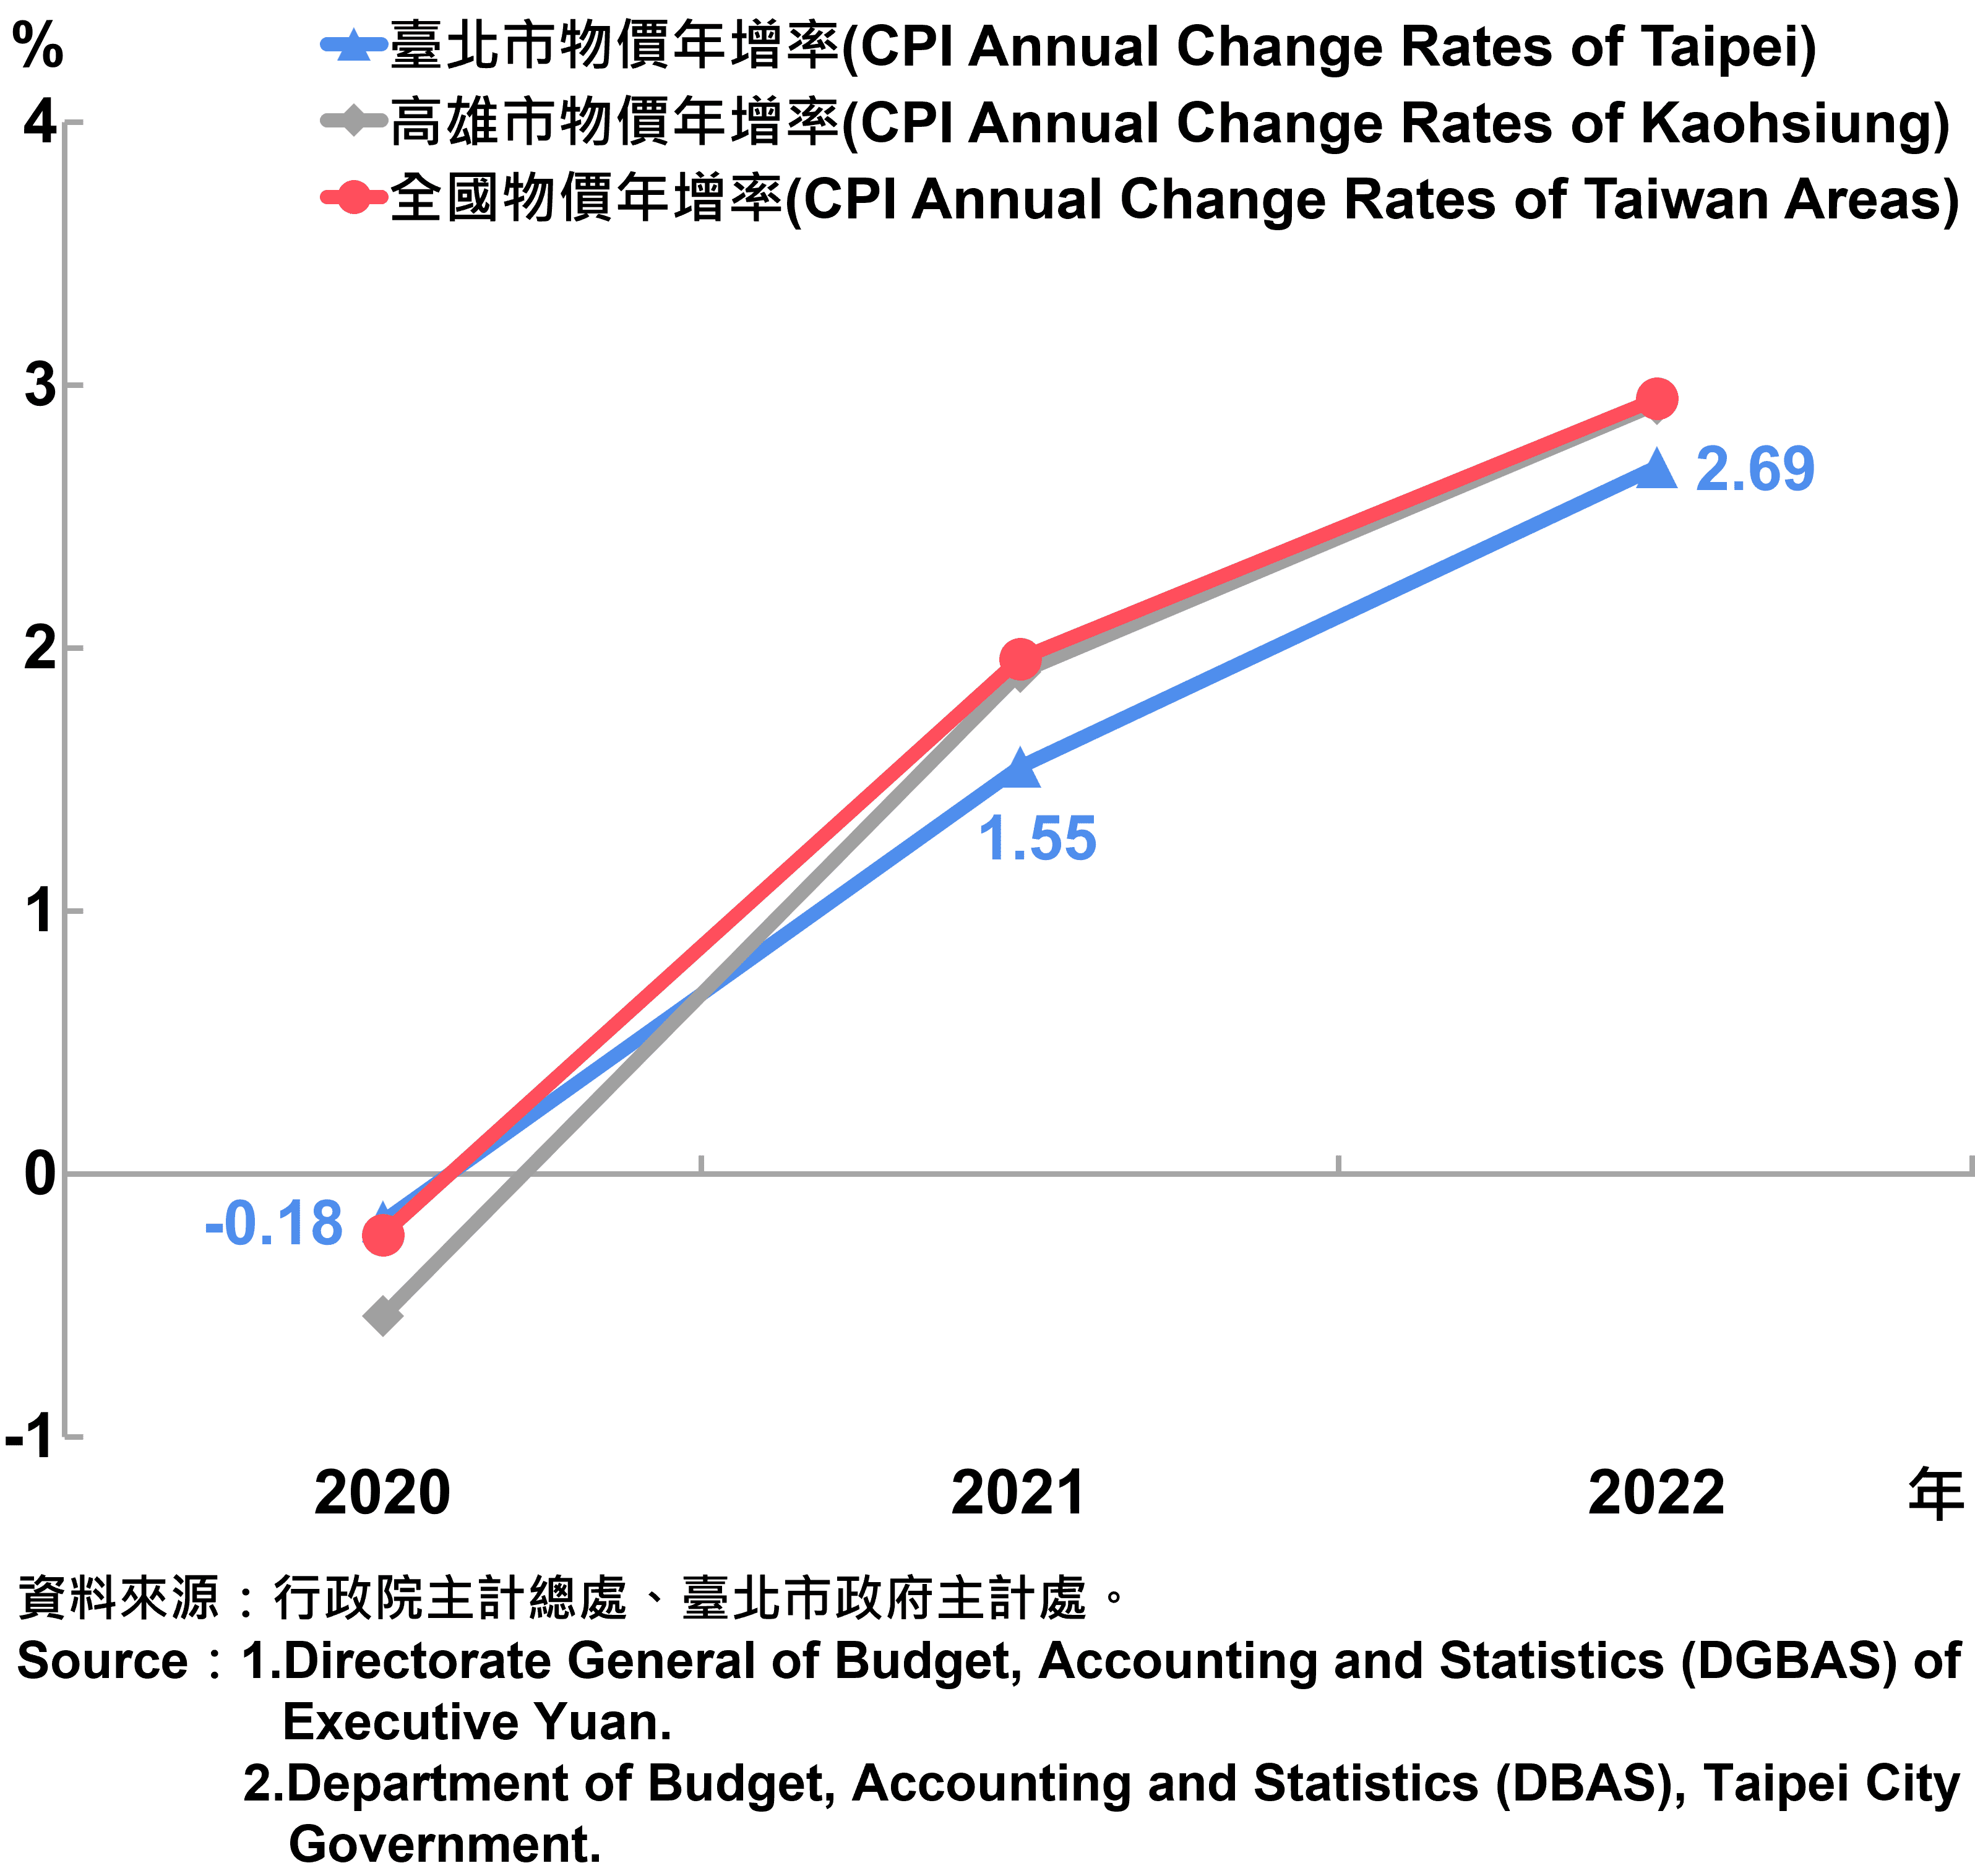 臺北市消費者物價指數（CPI）年增率—2022 Annual Growth Rate of CPI in Taipei City—2022